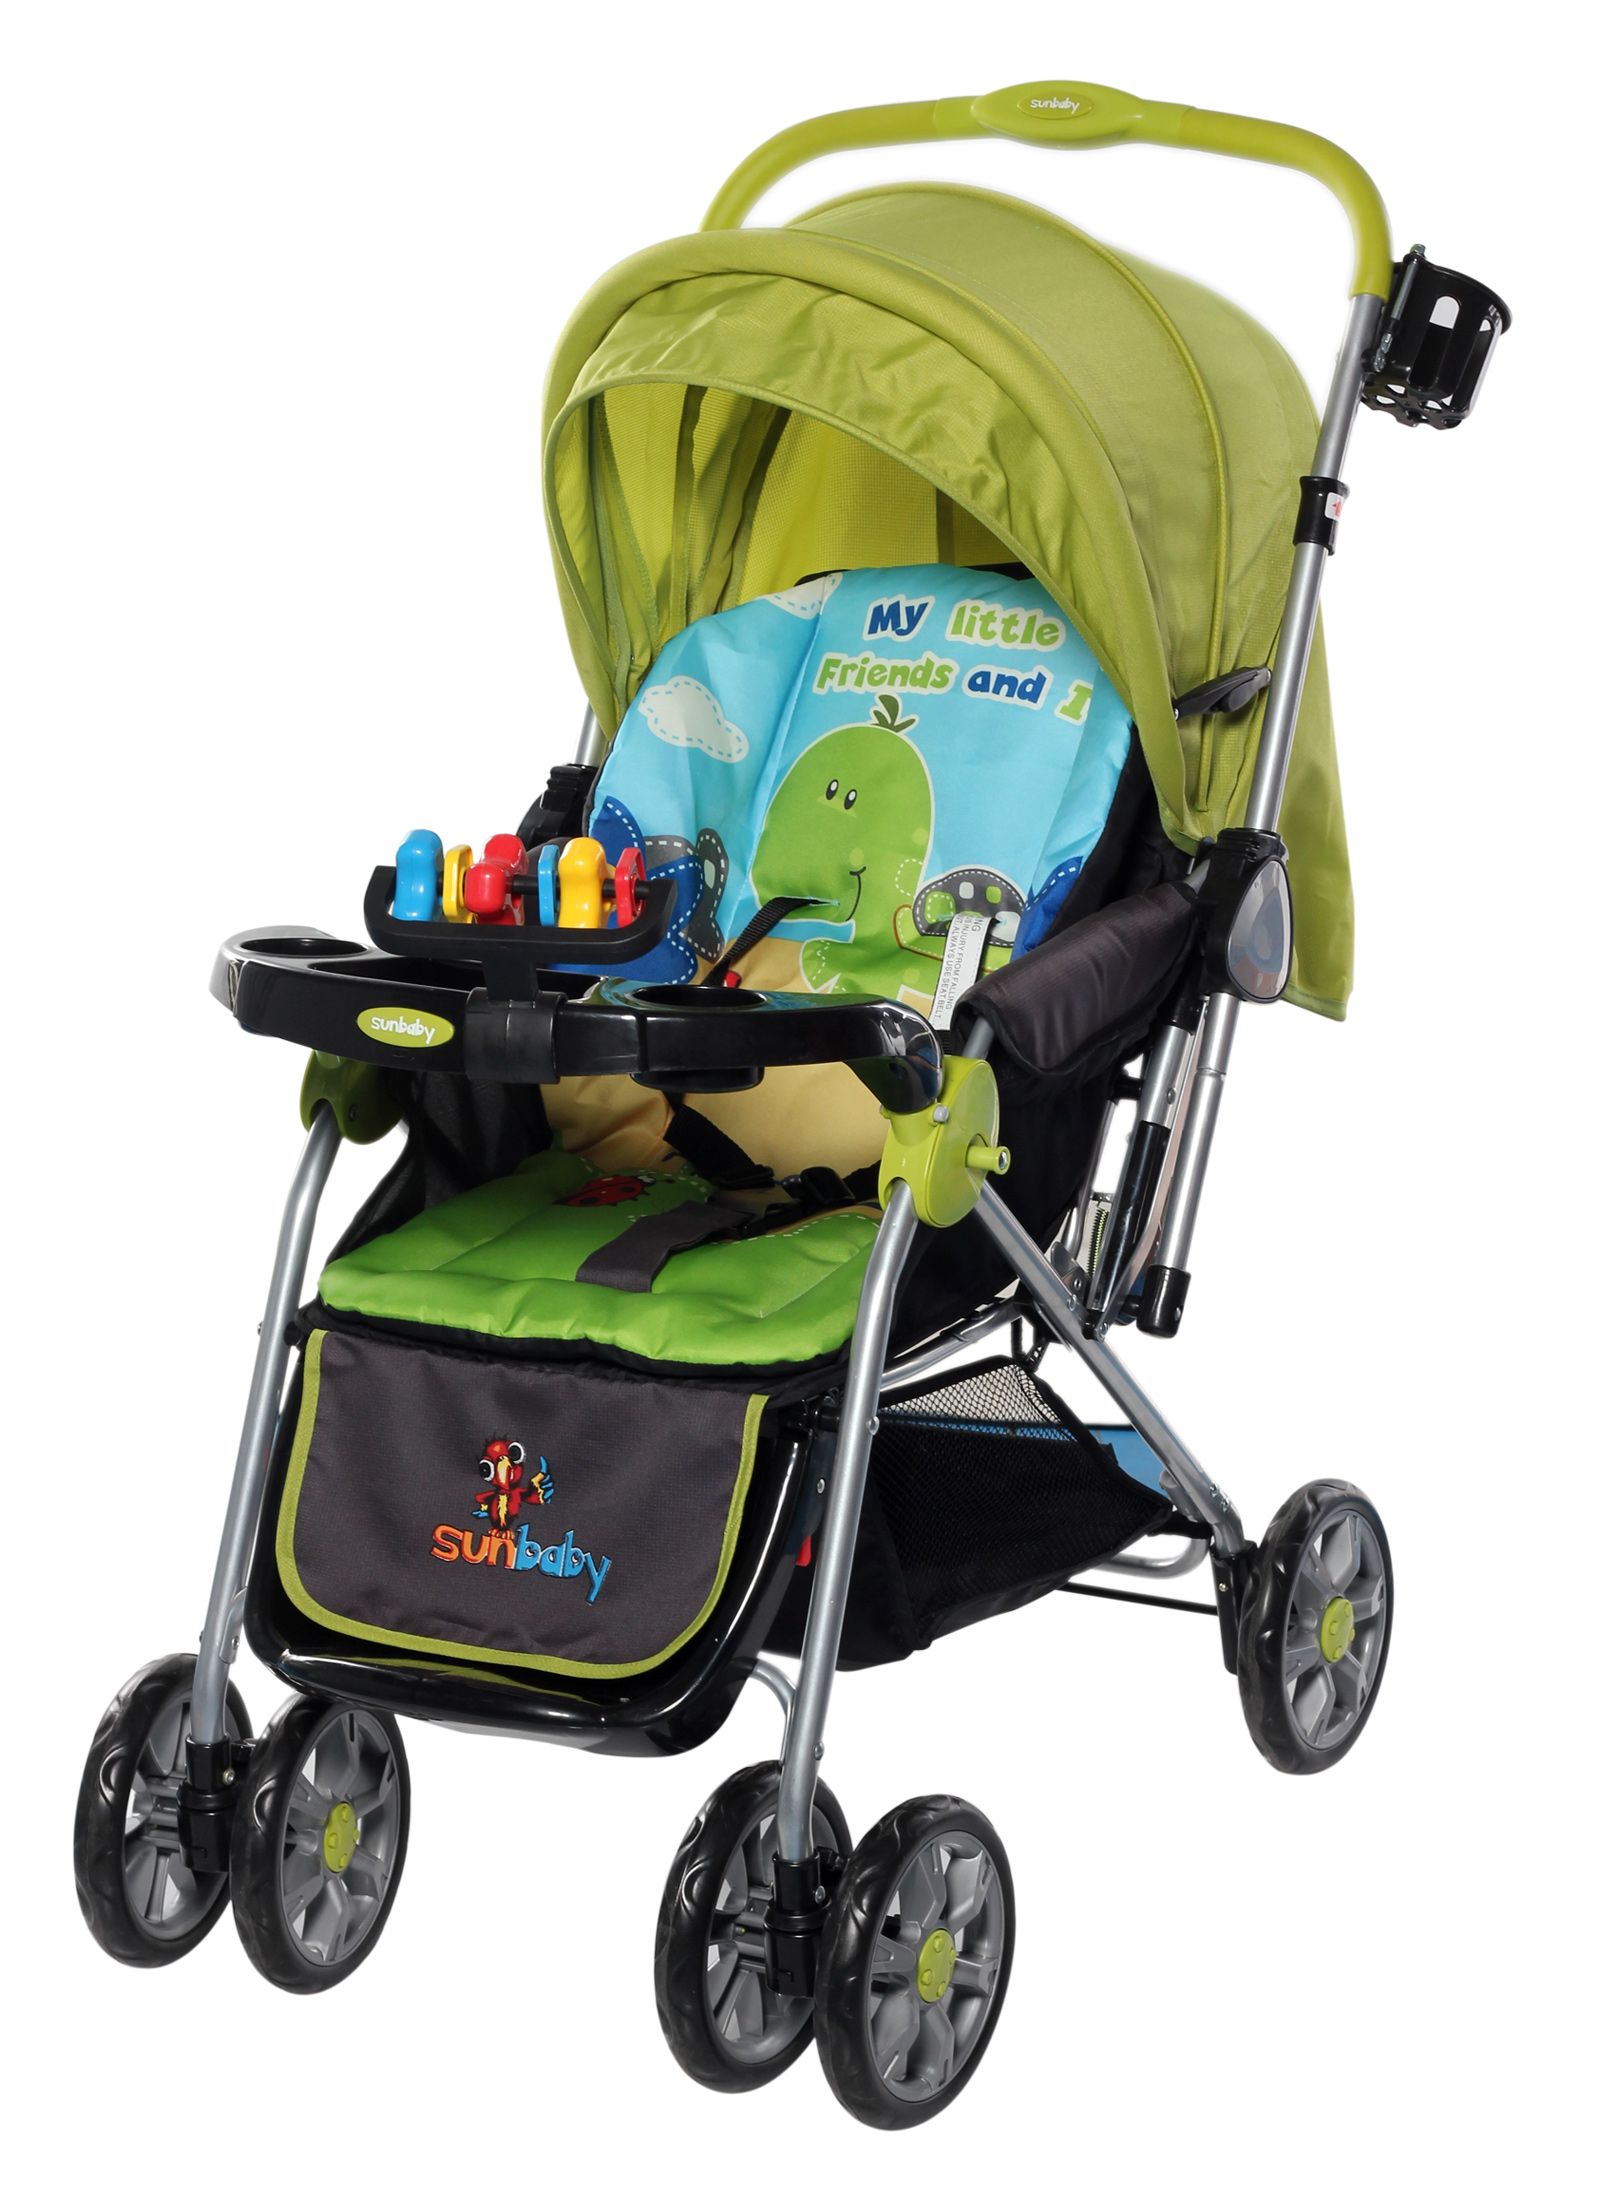 Sunbaby - Green Baby Stroller